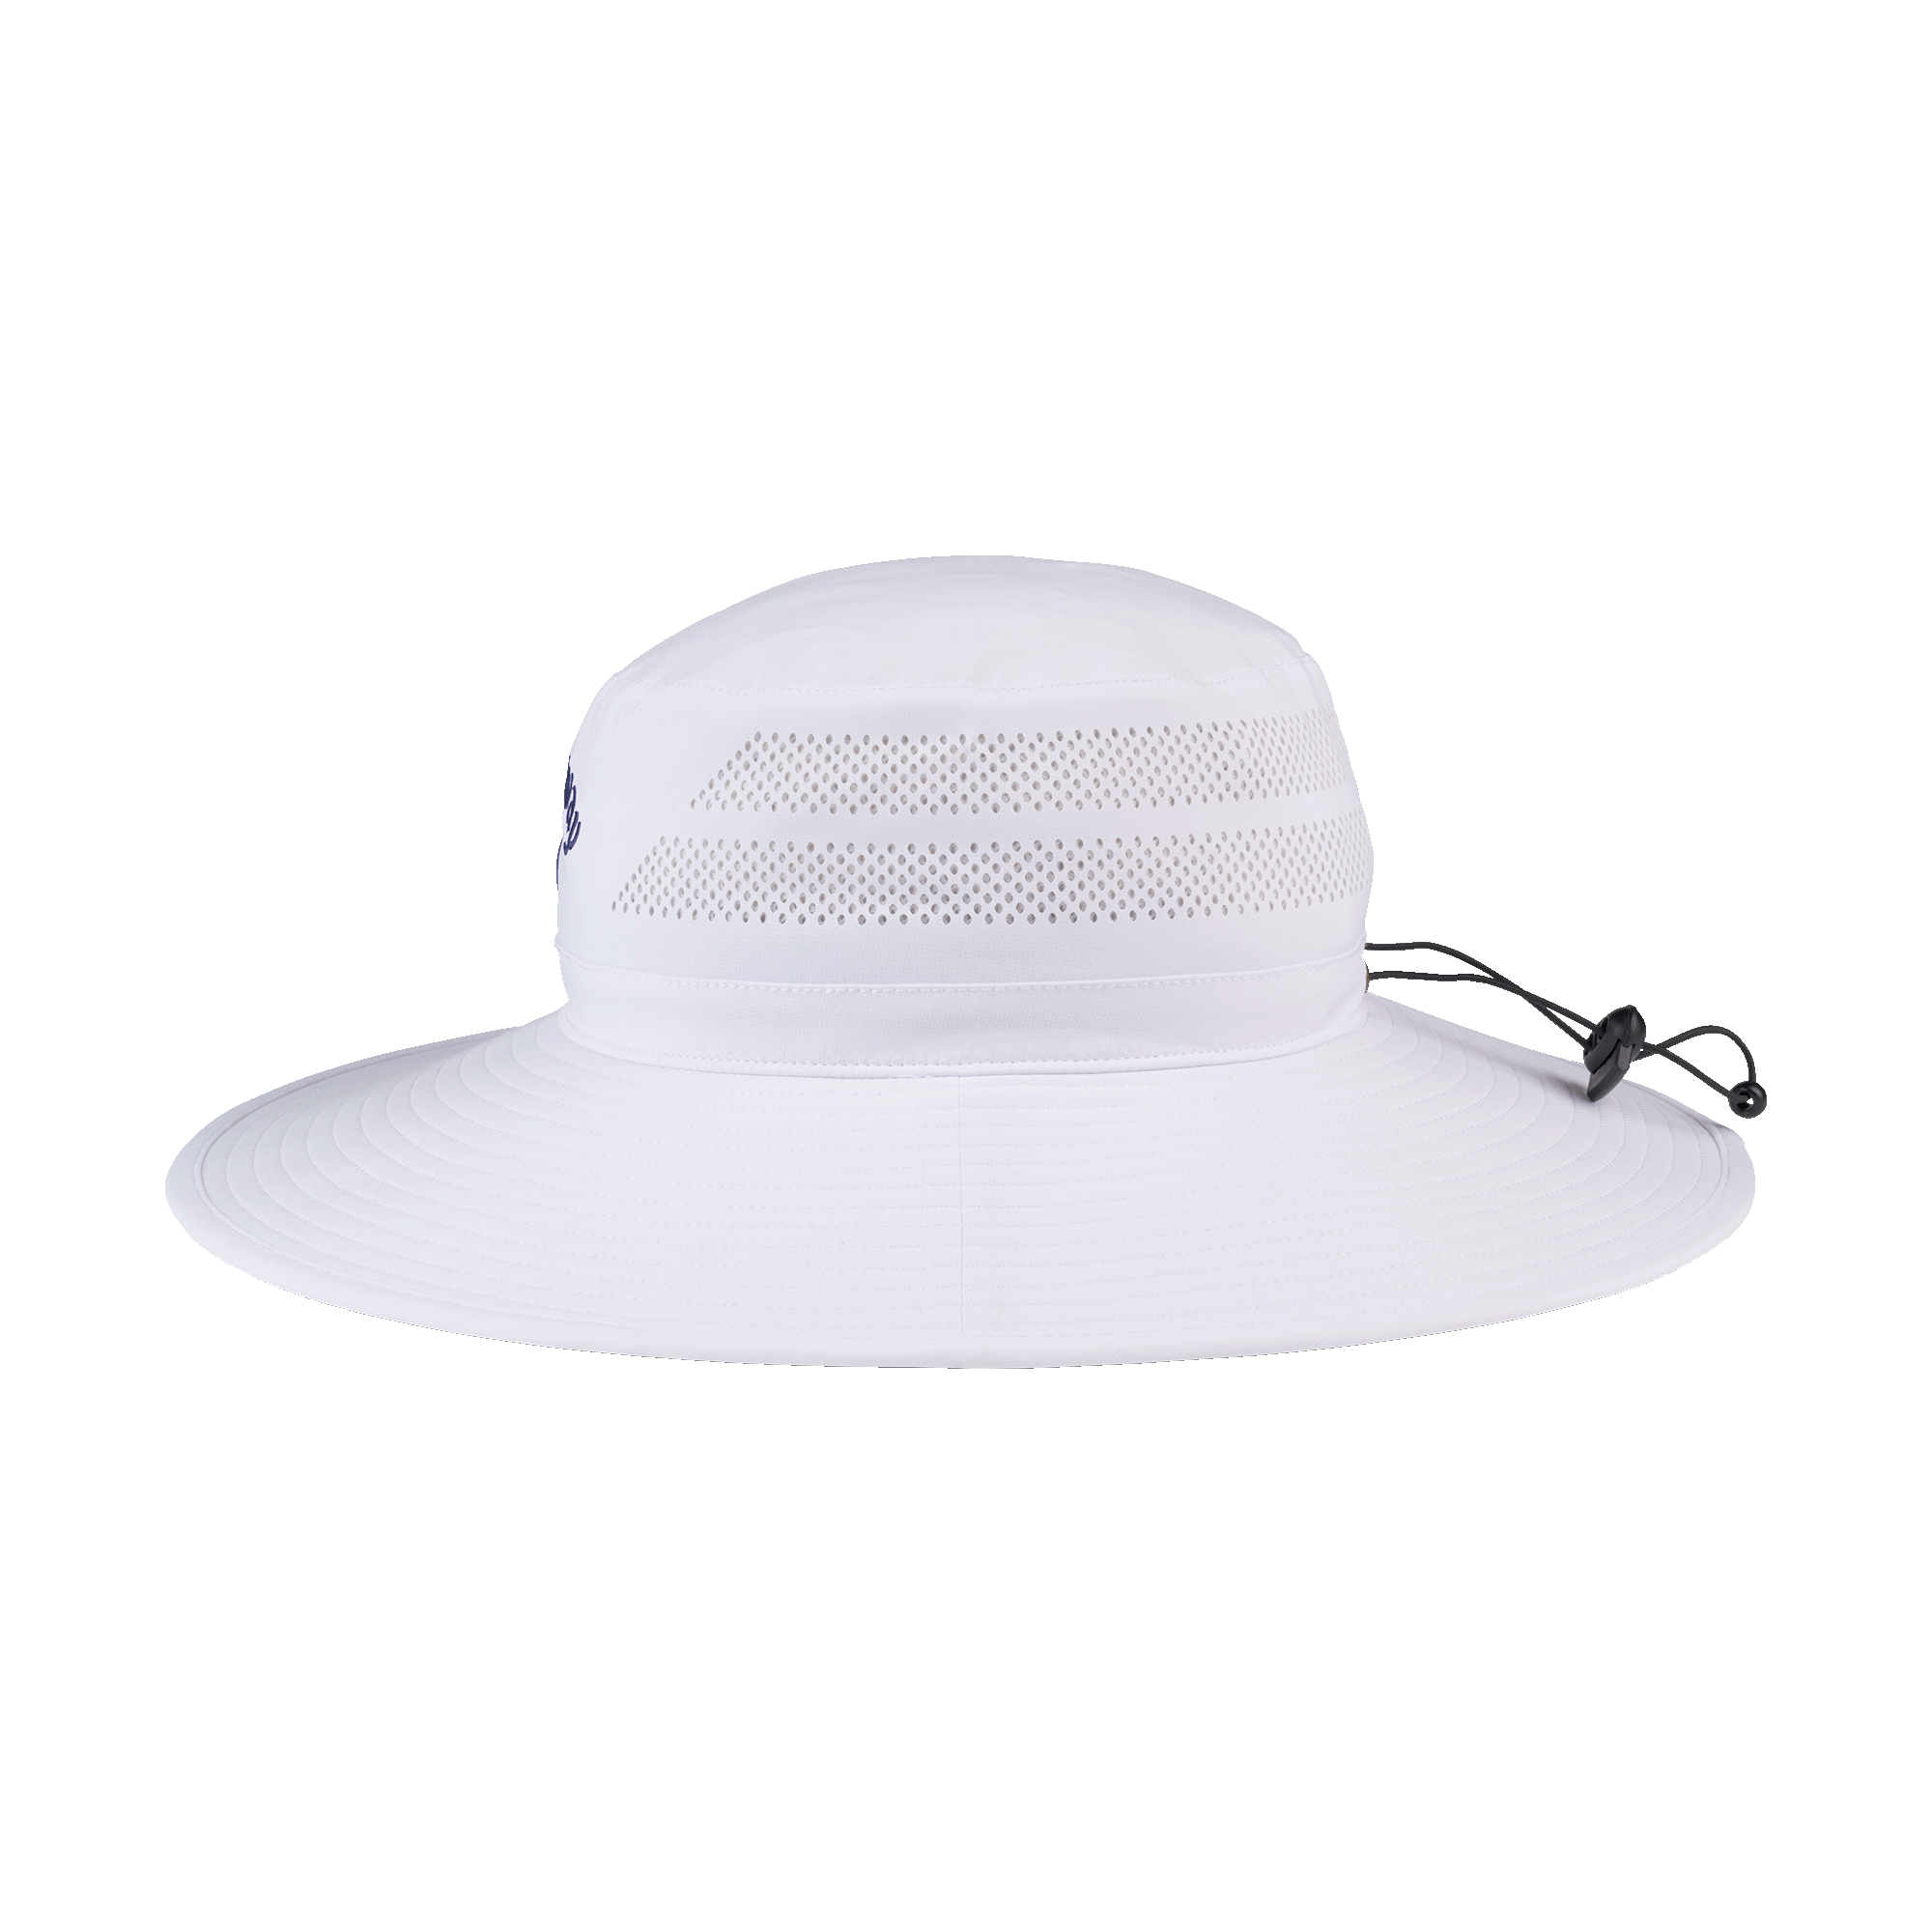 Callaway Men's Golf Sun Hat, White/Navy